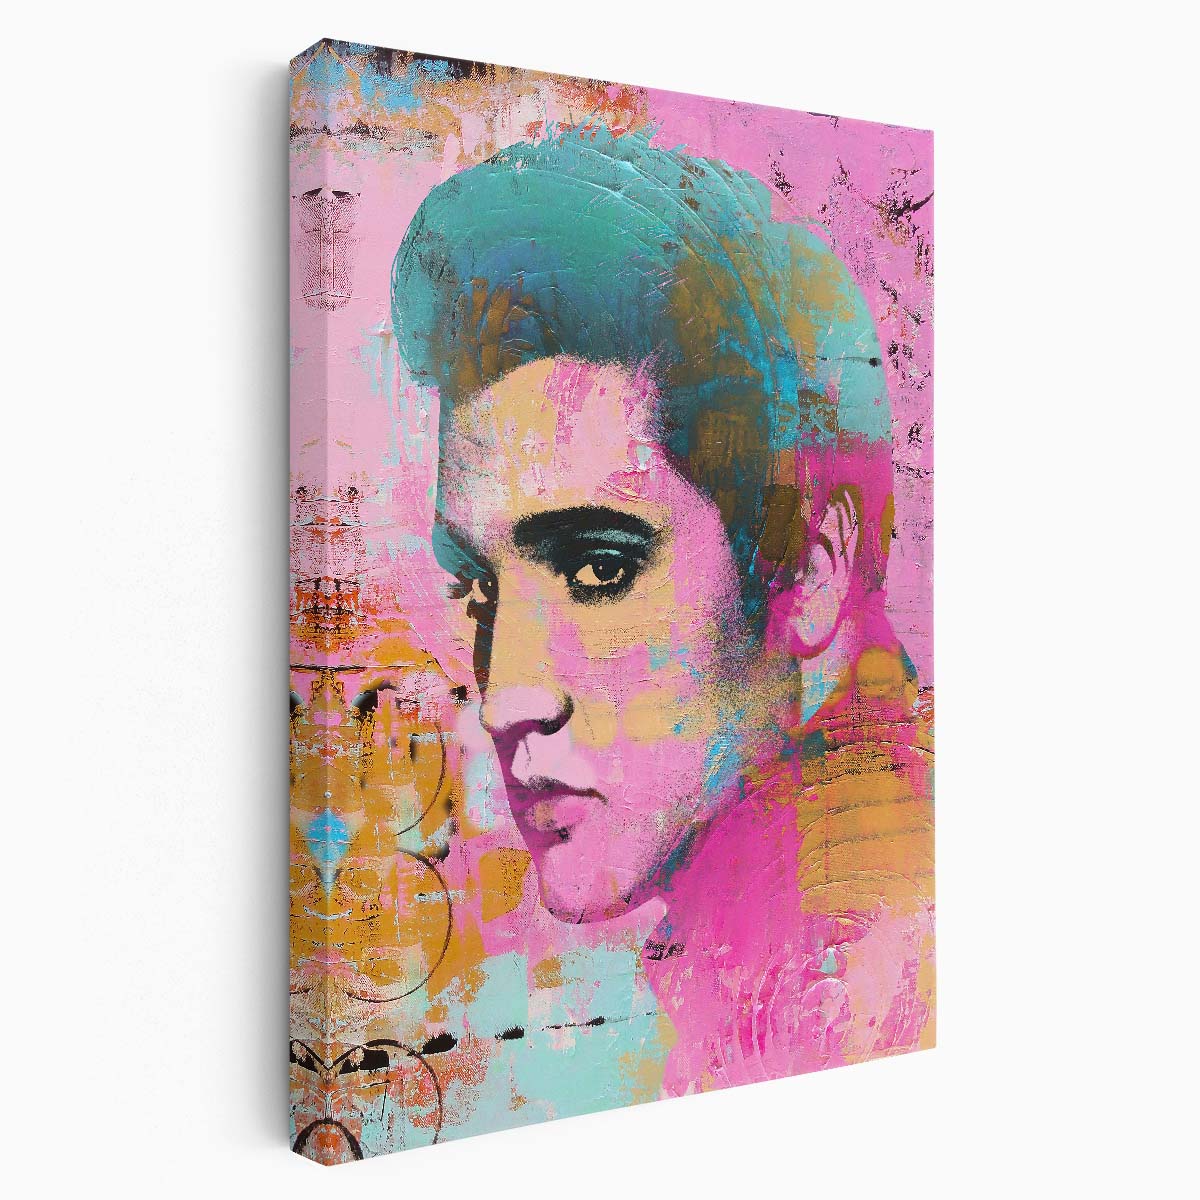 Elvis Presley Portrait Graffiti Wall Art by Luxuriance Designs. Made in USA.